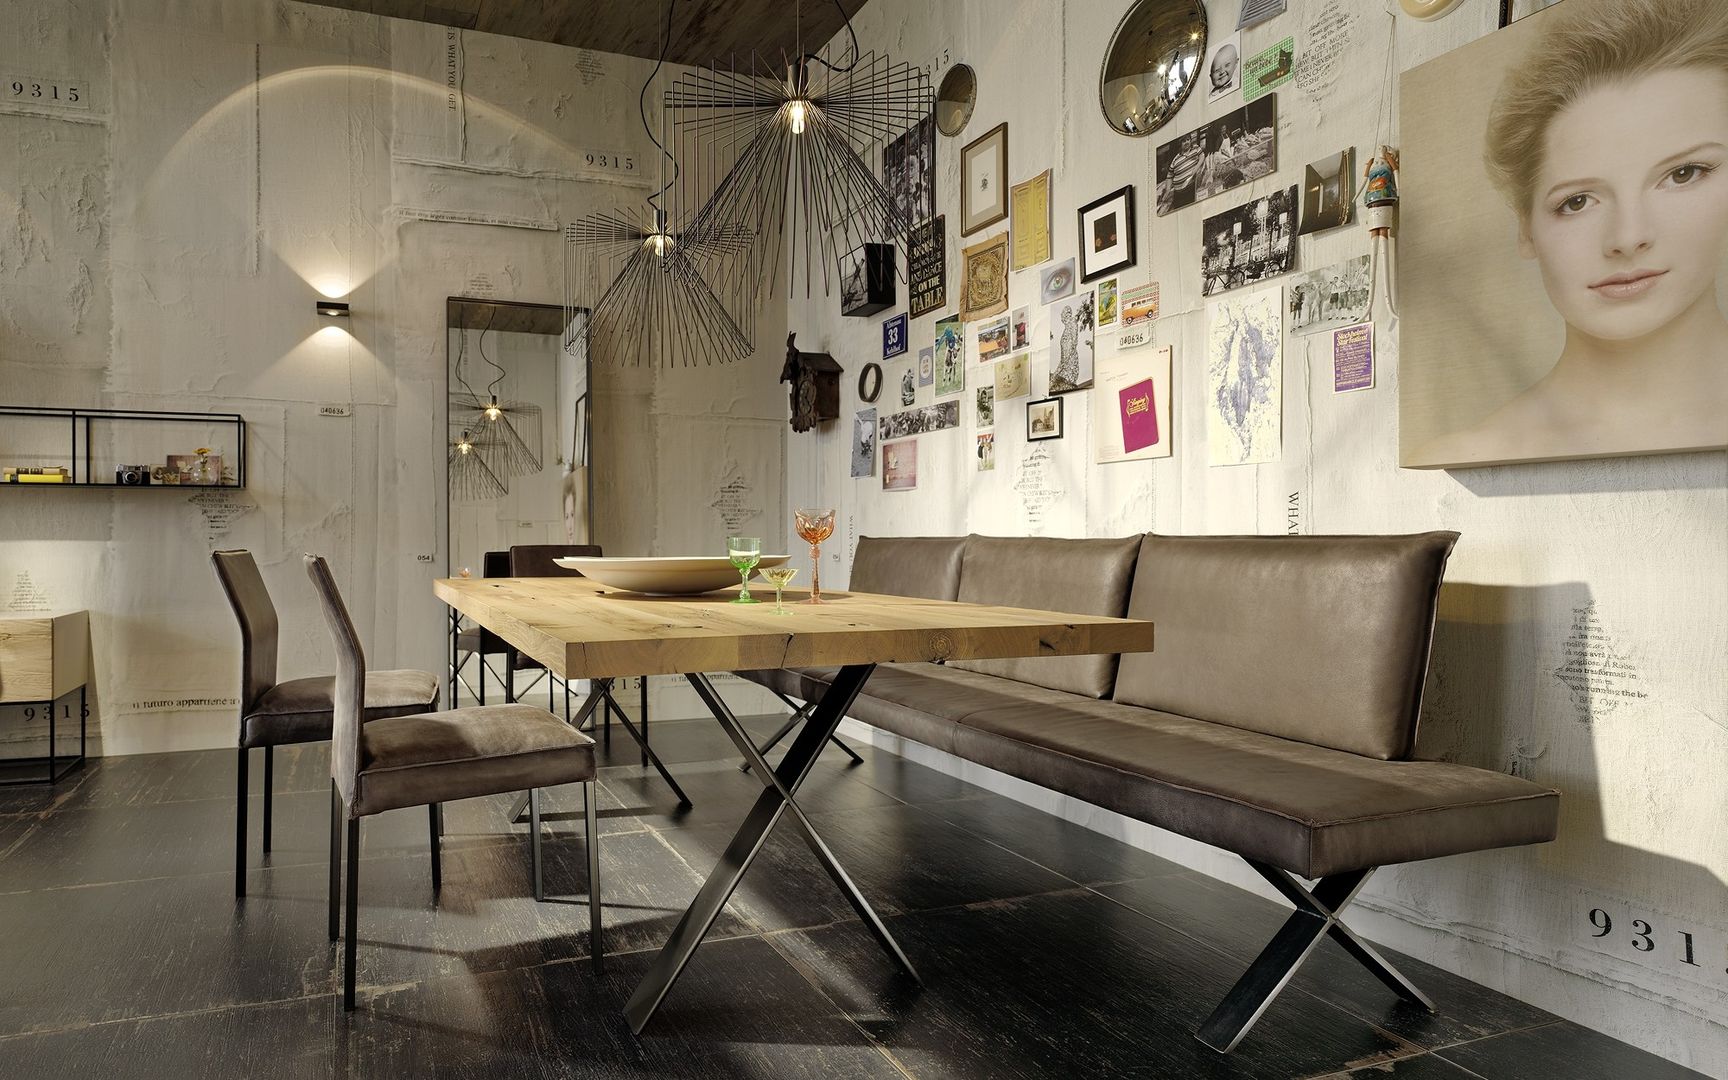 Essgruppen - HAAS Möbel, Wohndesign Maierhofer Wohndesign Maierhofer Modern dining room Chairs & benches